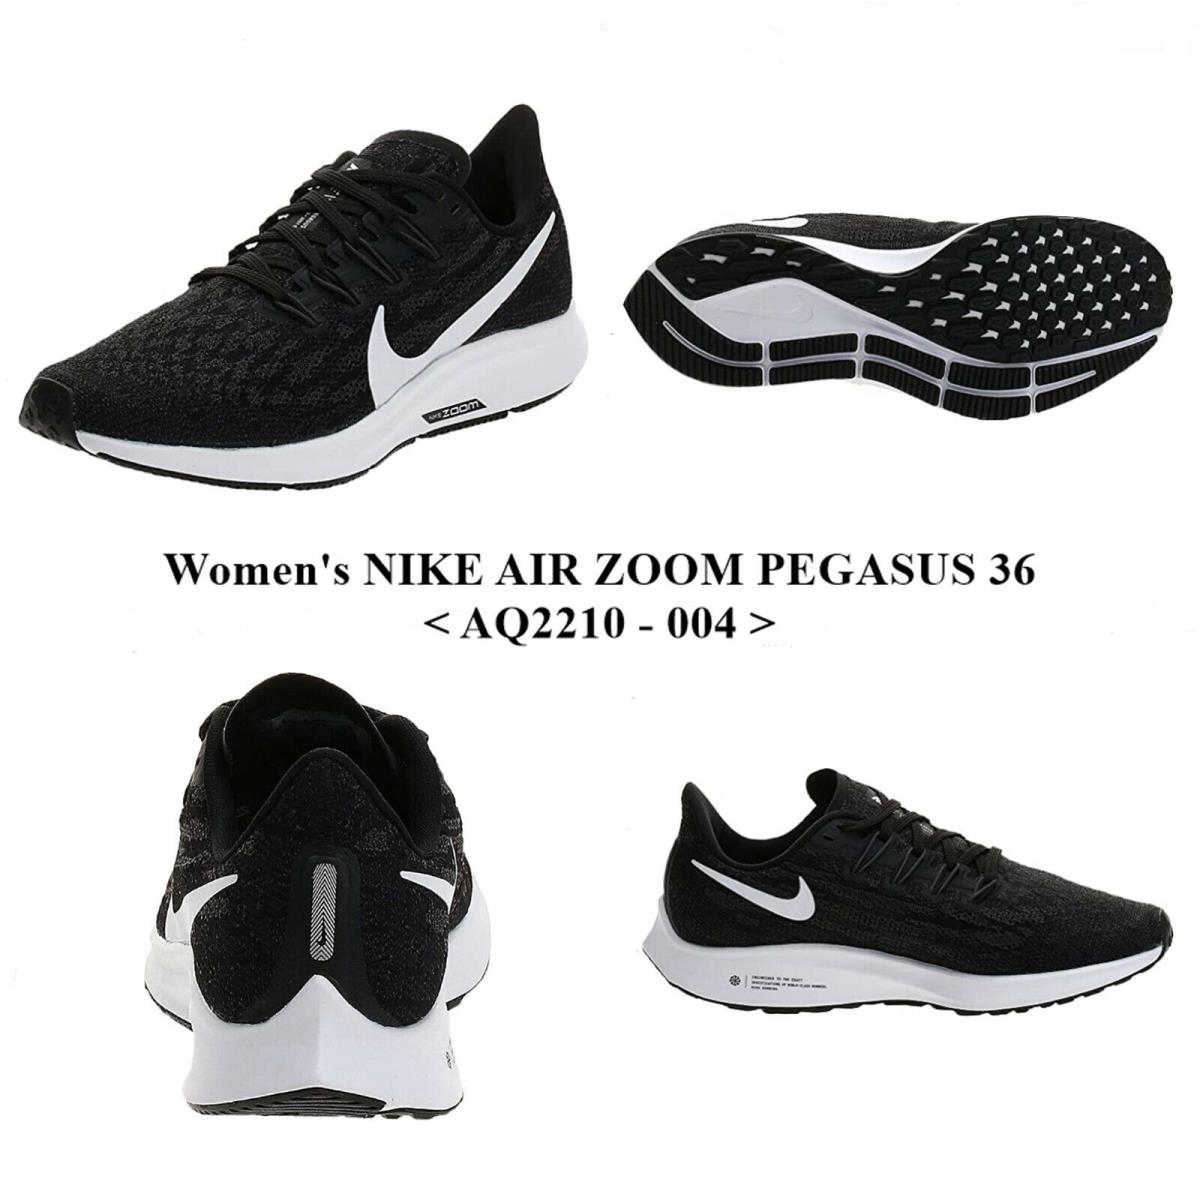 Women`s Nike Air Zoom Pegasus 36 <AQ2210 - 004> Running/casual Shoe.new with Box - BLACK / WHITE-THUNDER GREY